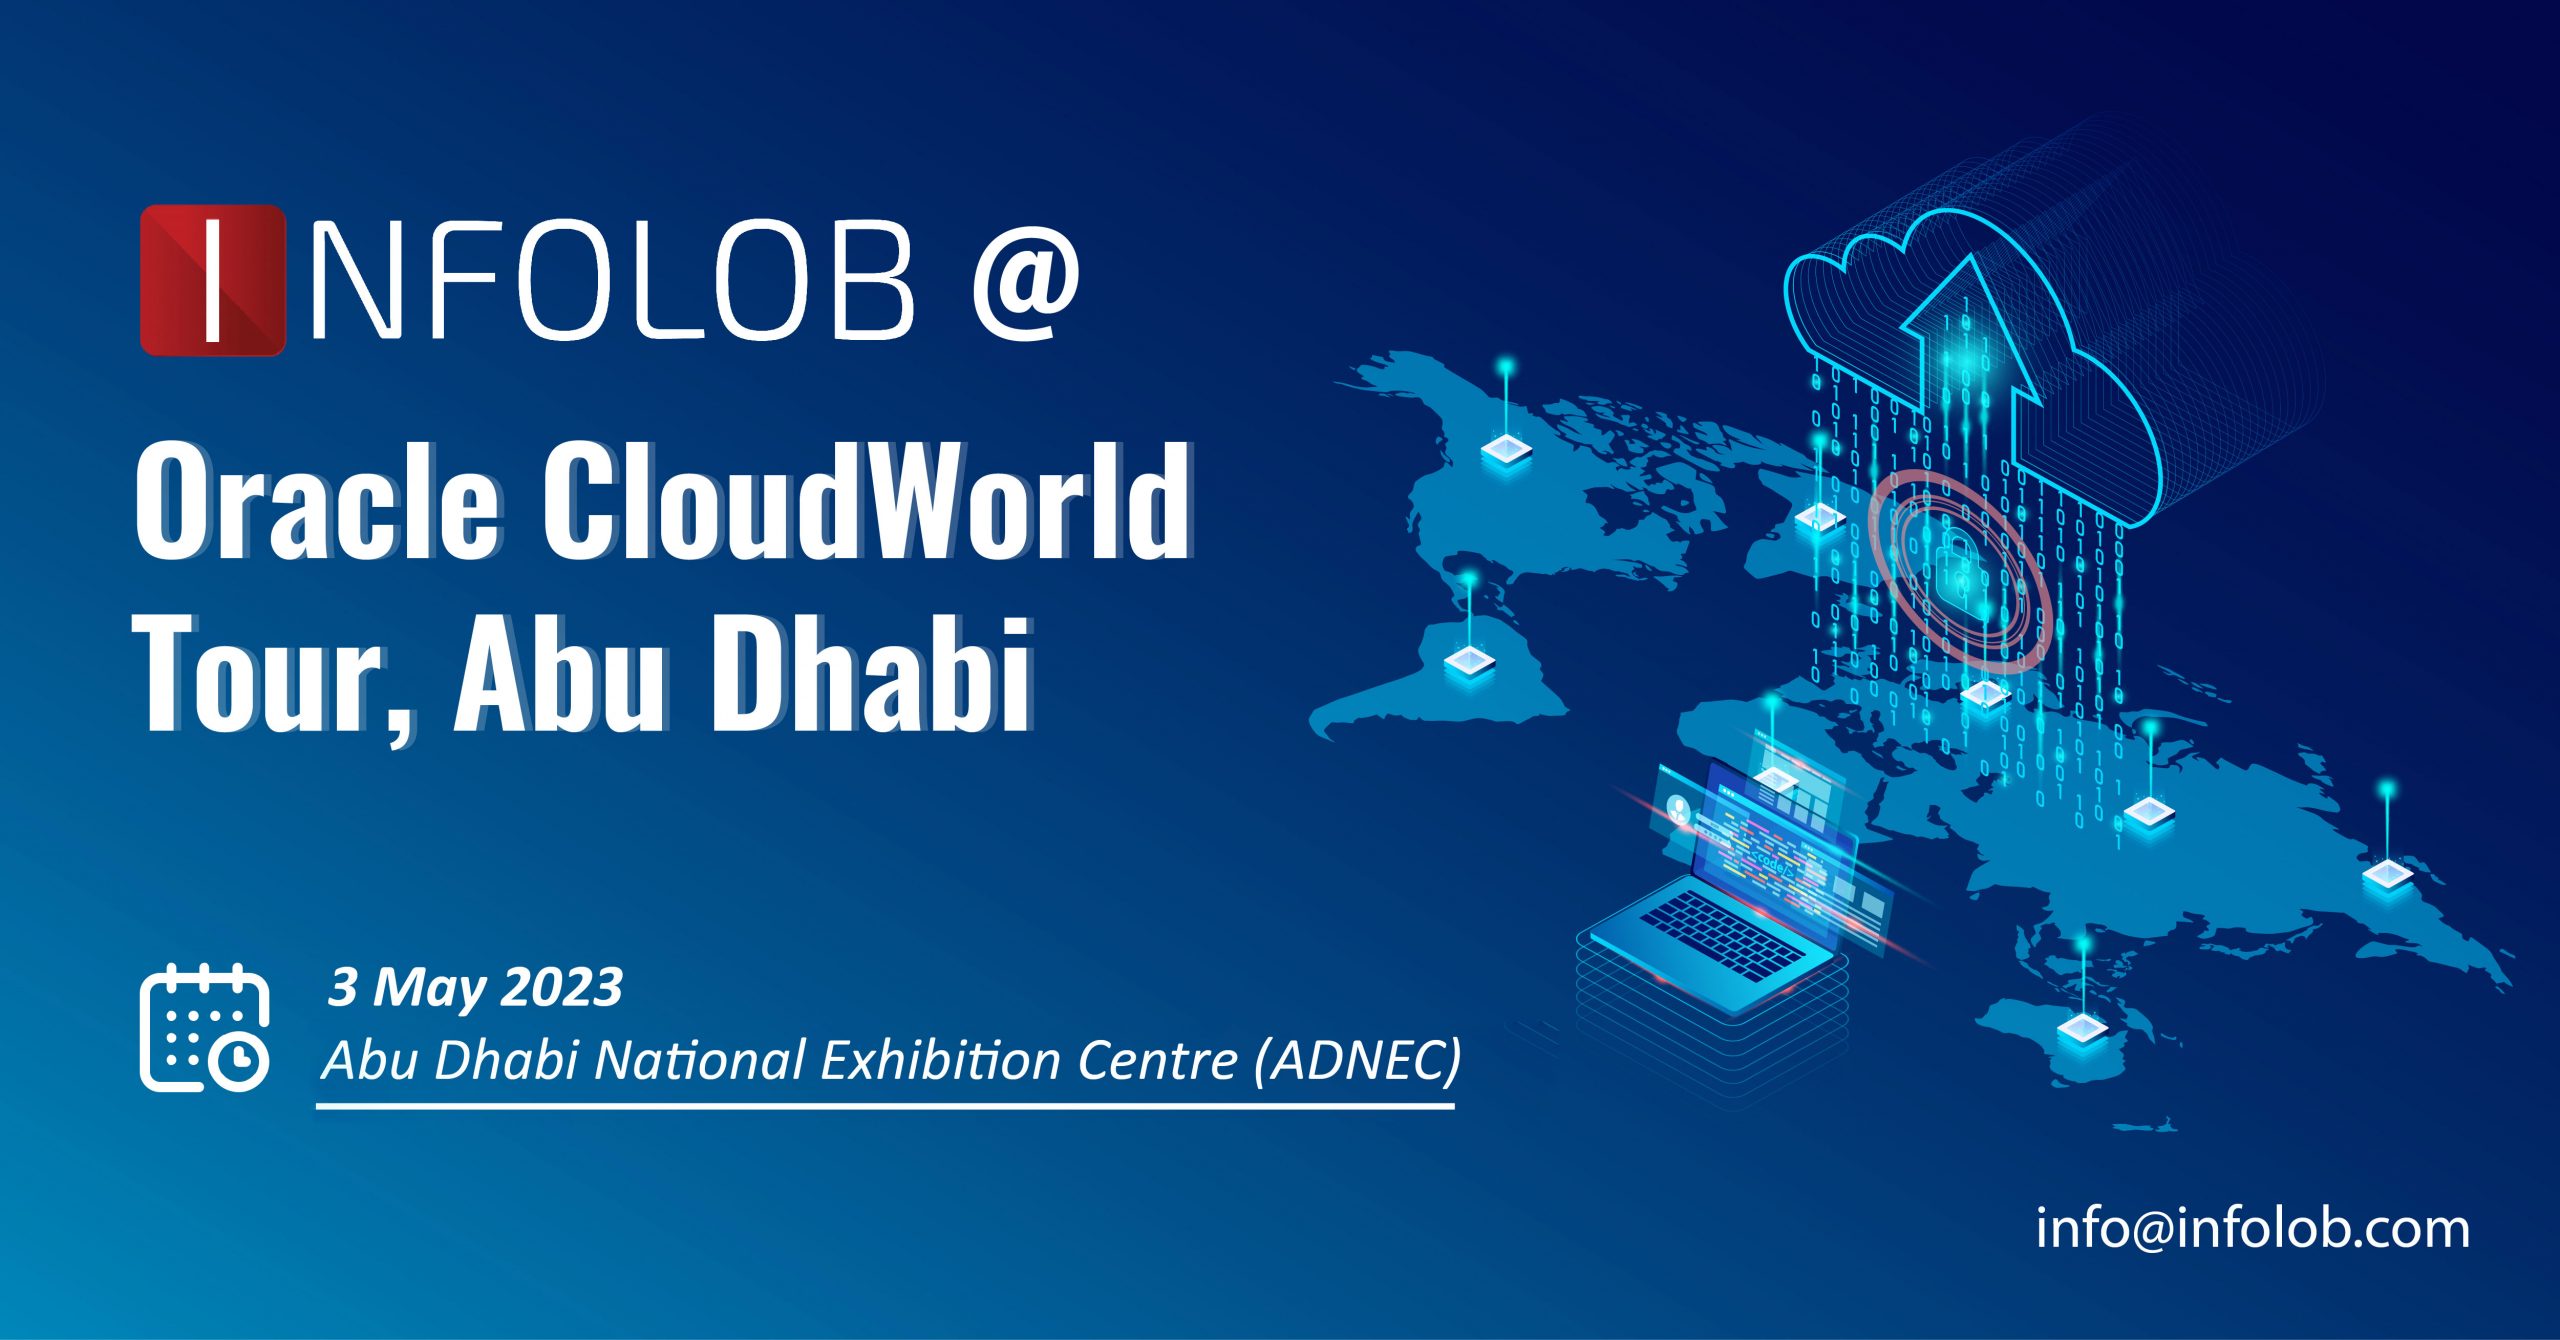 INFOLOB Oracle CloudWorld Tour, Abu Dhabi • INFOLOB Global